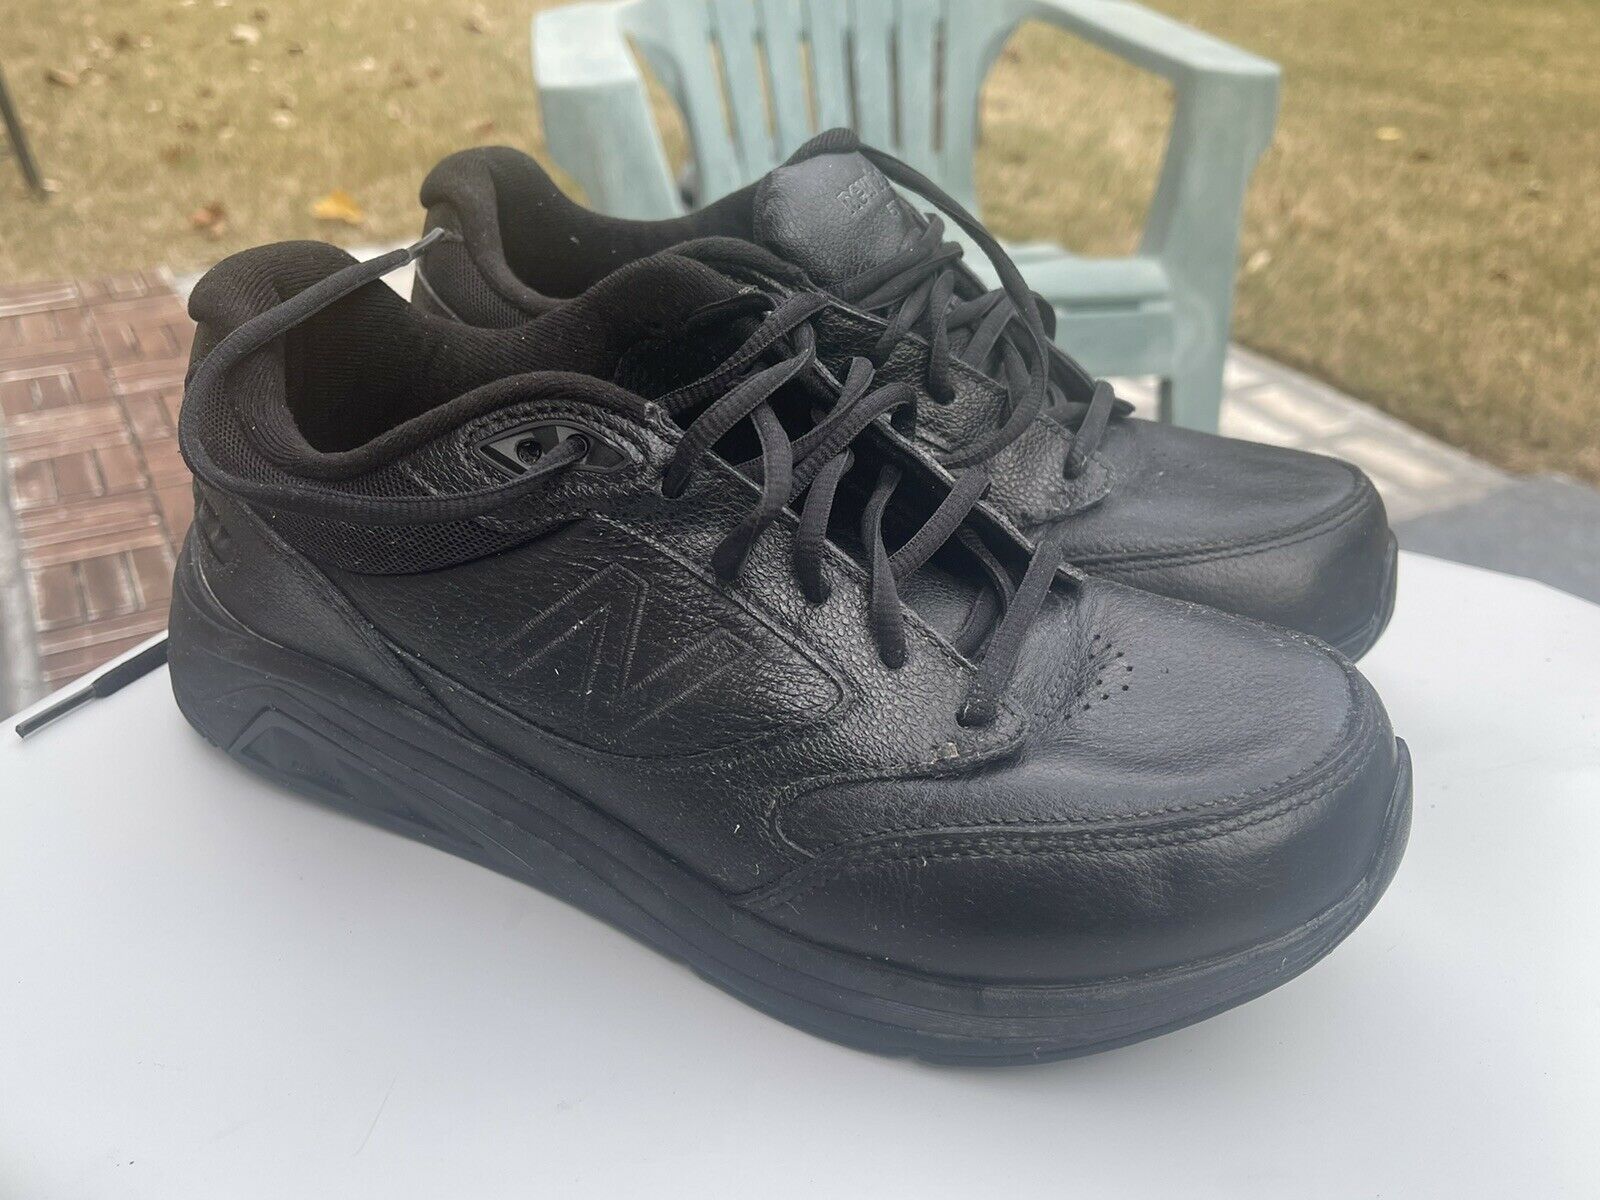 New Balance 928v3 Men's Size 8 X-Wide (4E) Leather Comfort Walking Shoes Black